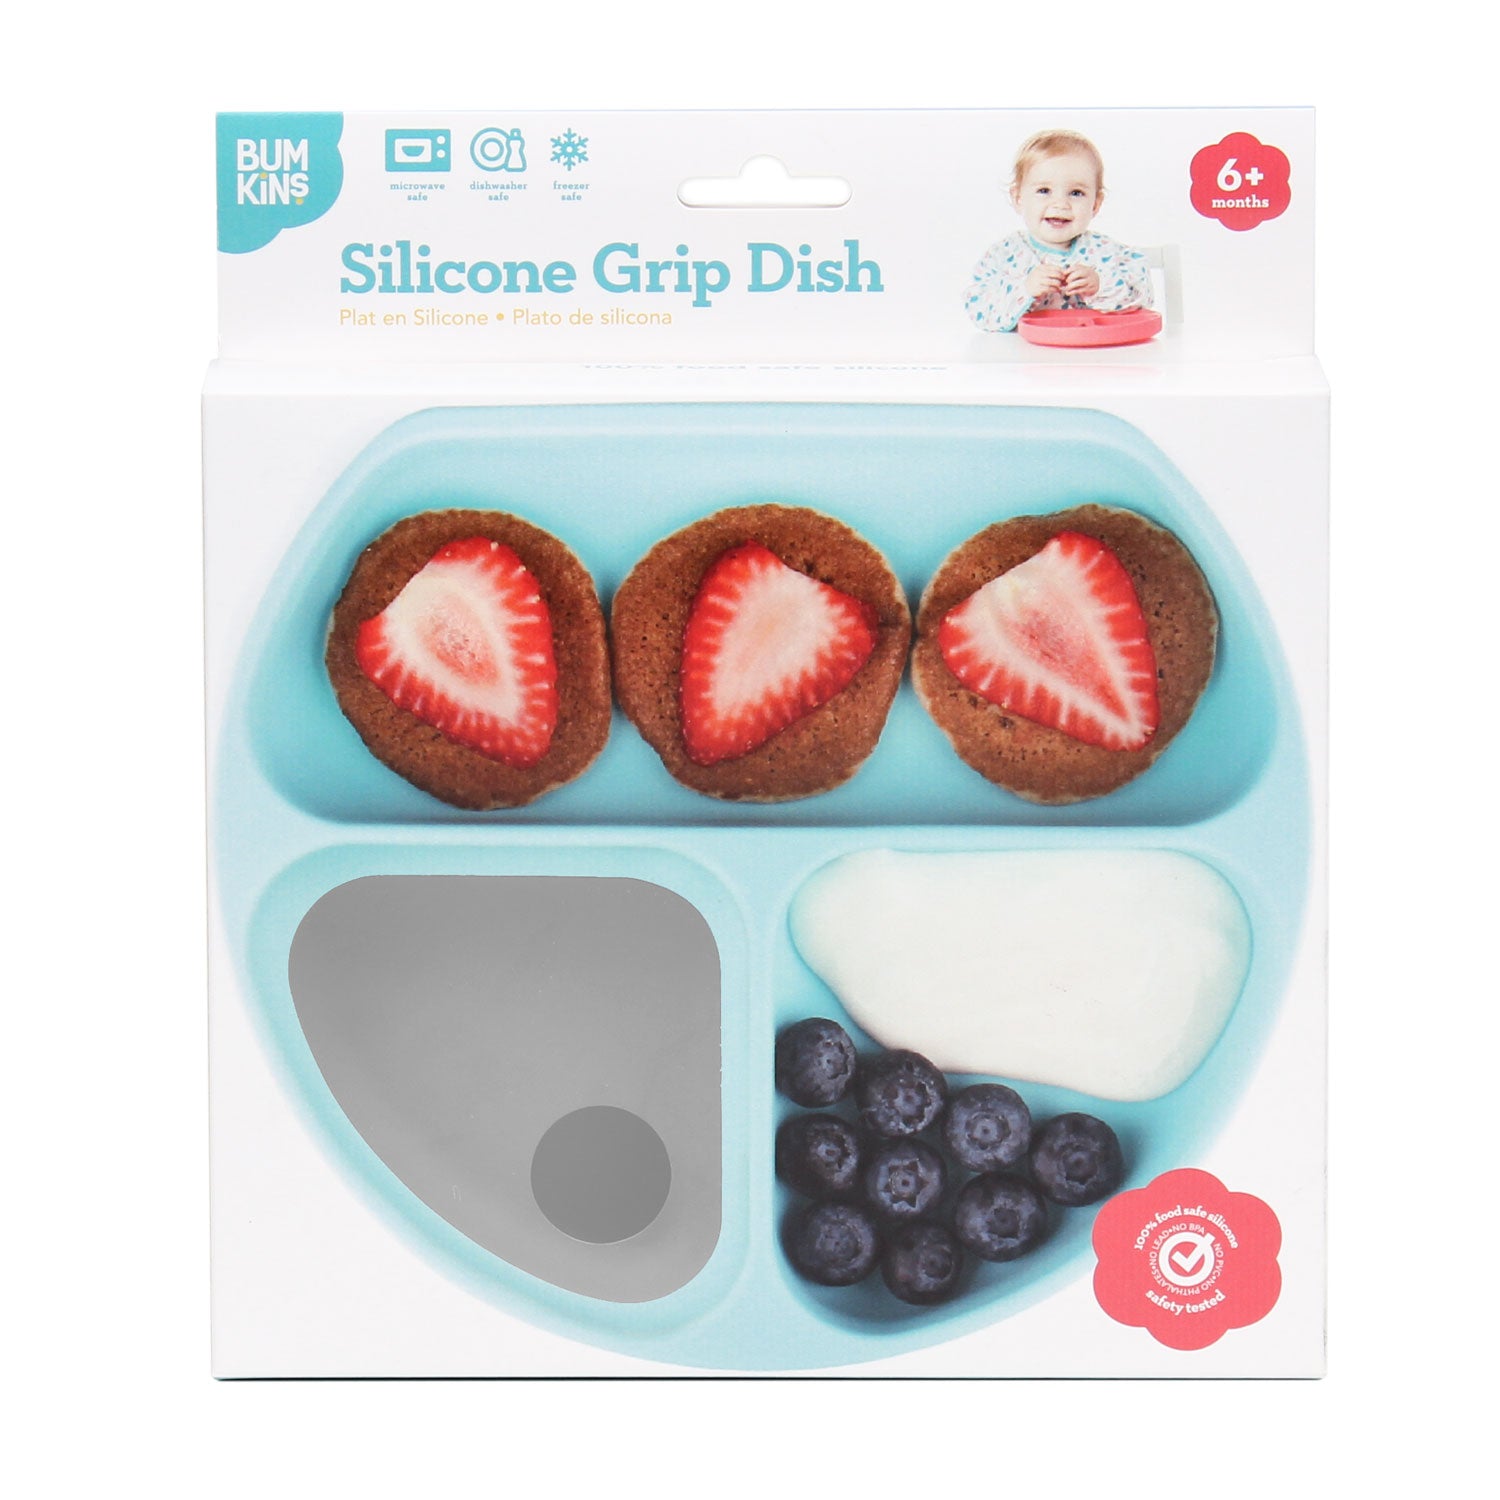 Silicone Grip Dish